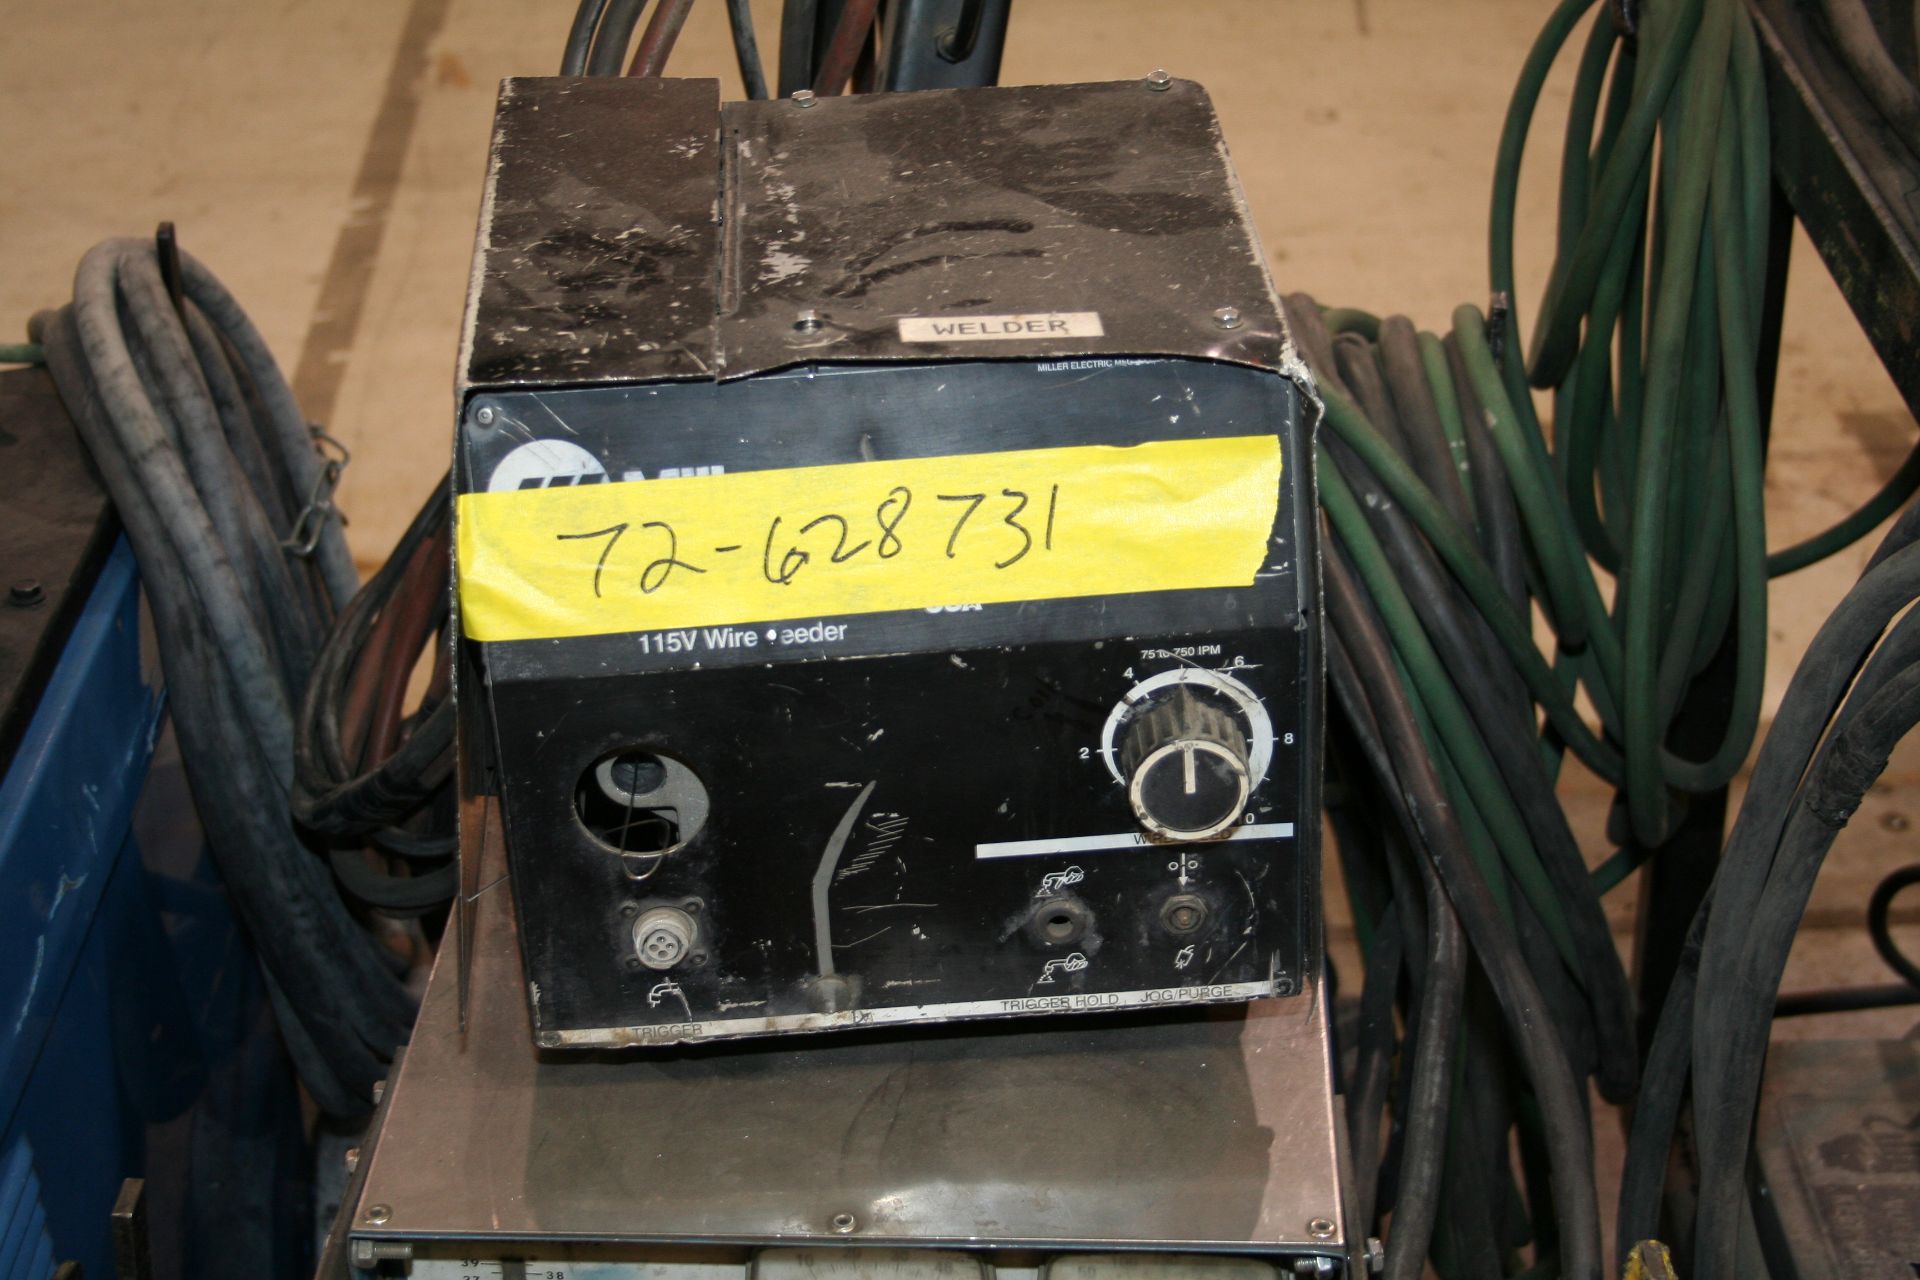 Miller CP-200 Welder with Miller R-115 Wire Feeder - Image 3 of 3